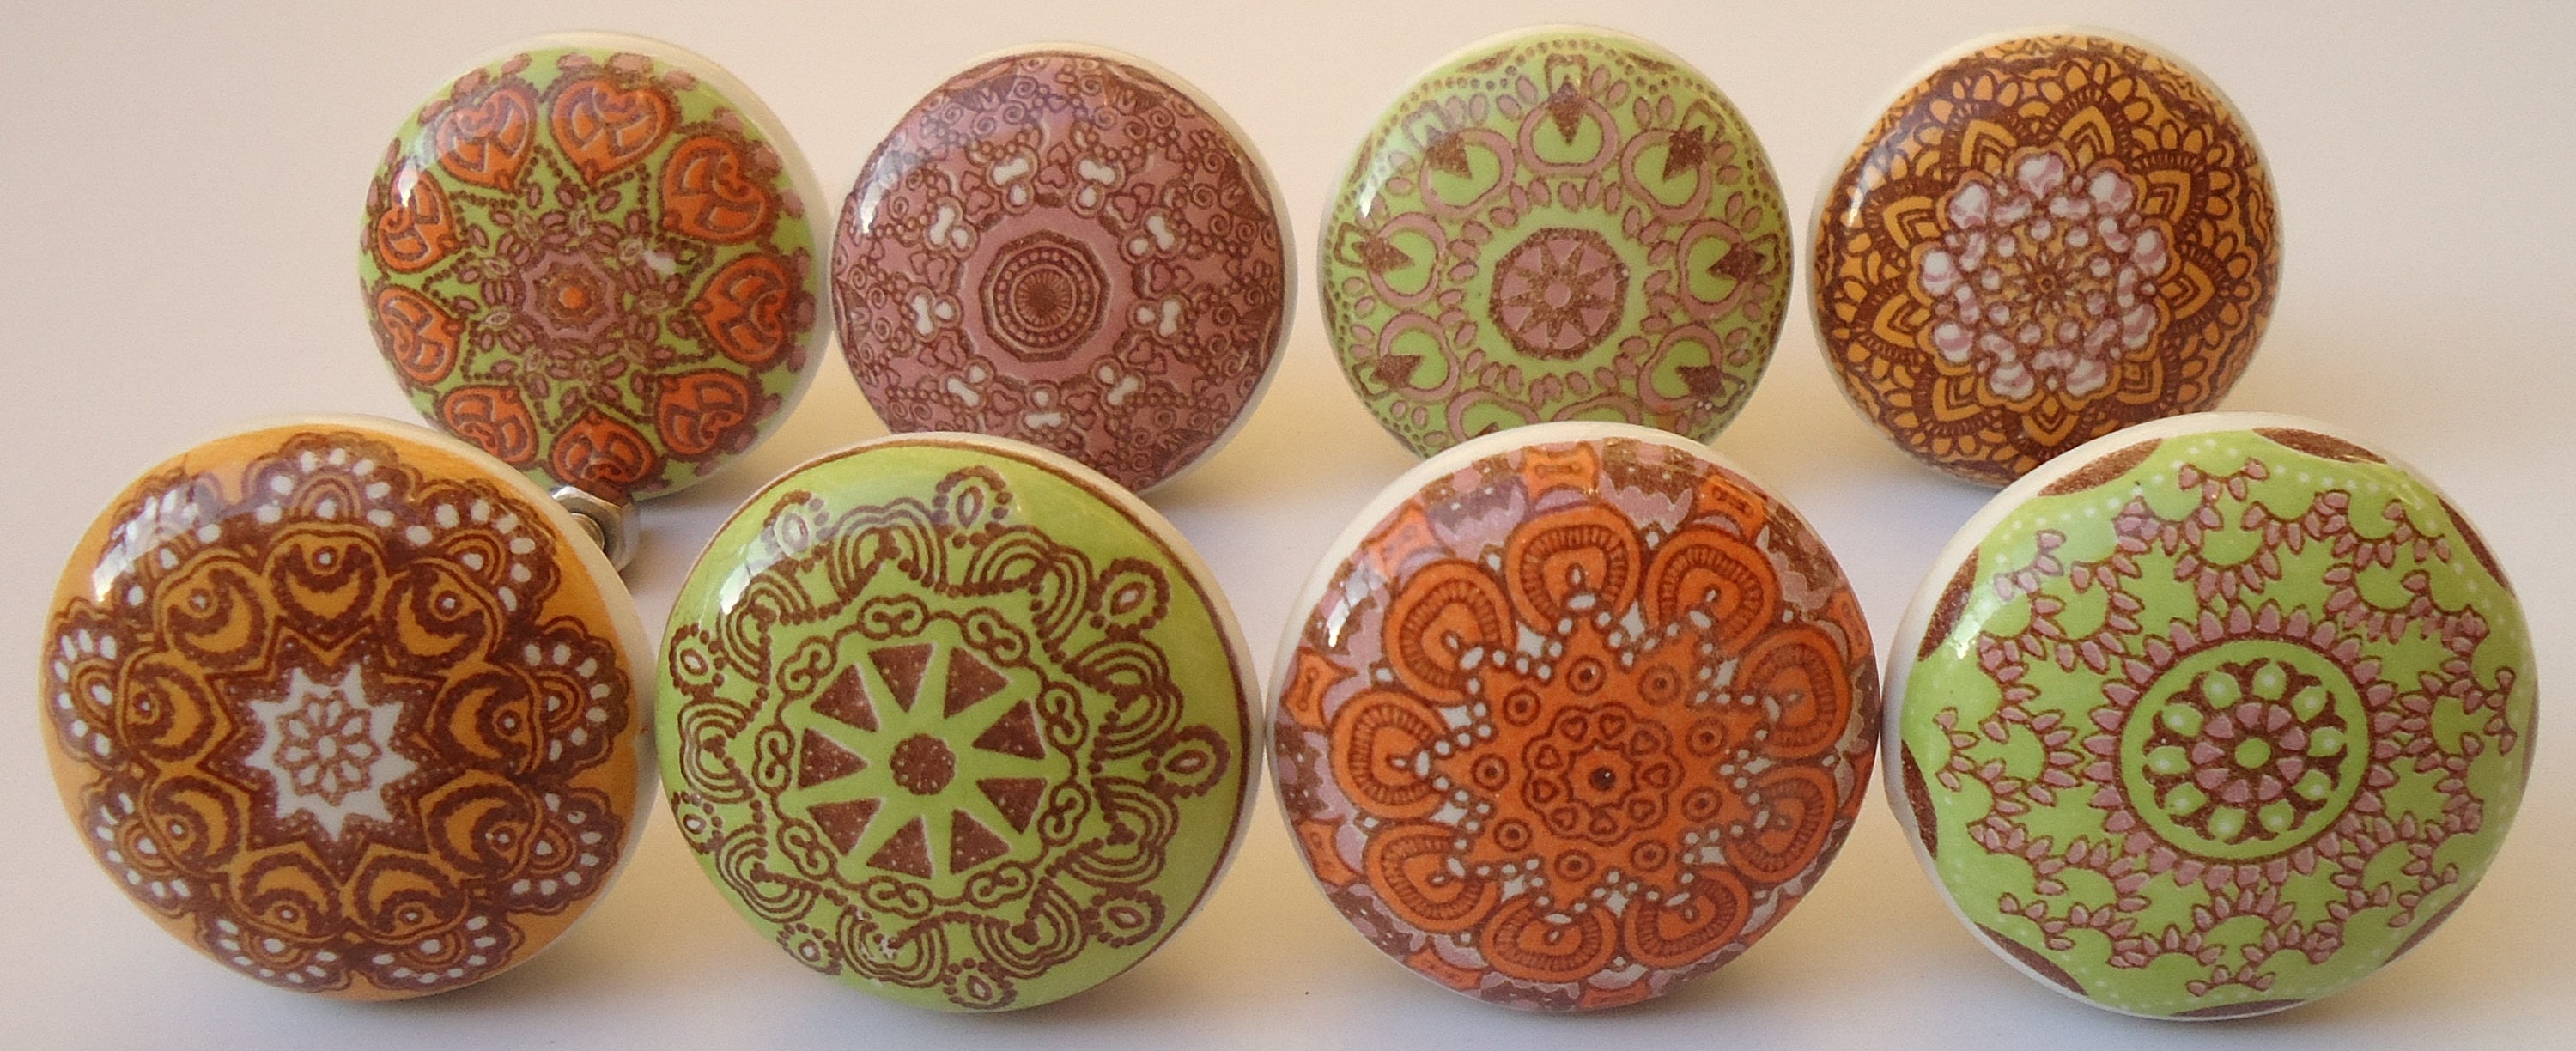 Multicolor Multidesign Ceramic Knobs Flat Kitchen Cabinet | Etsy